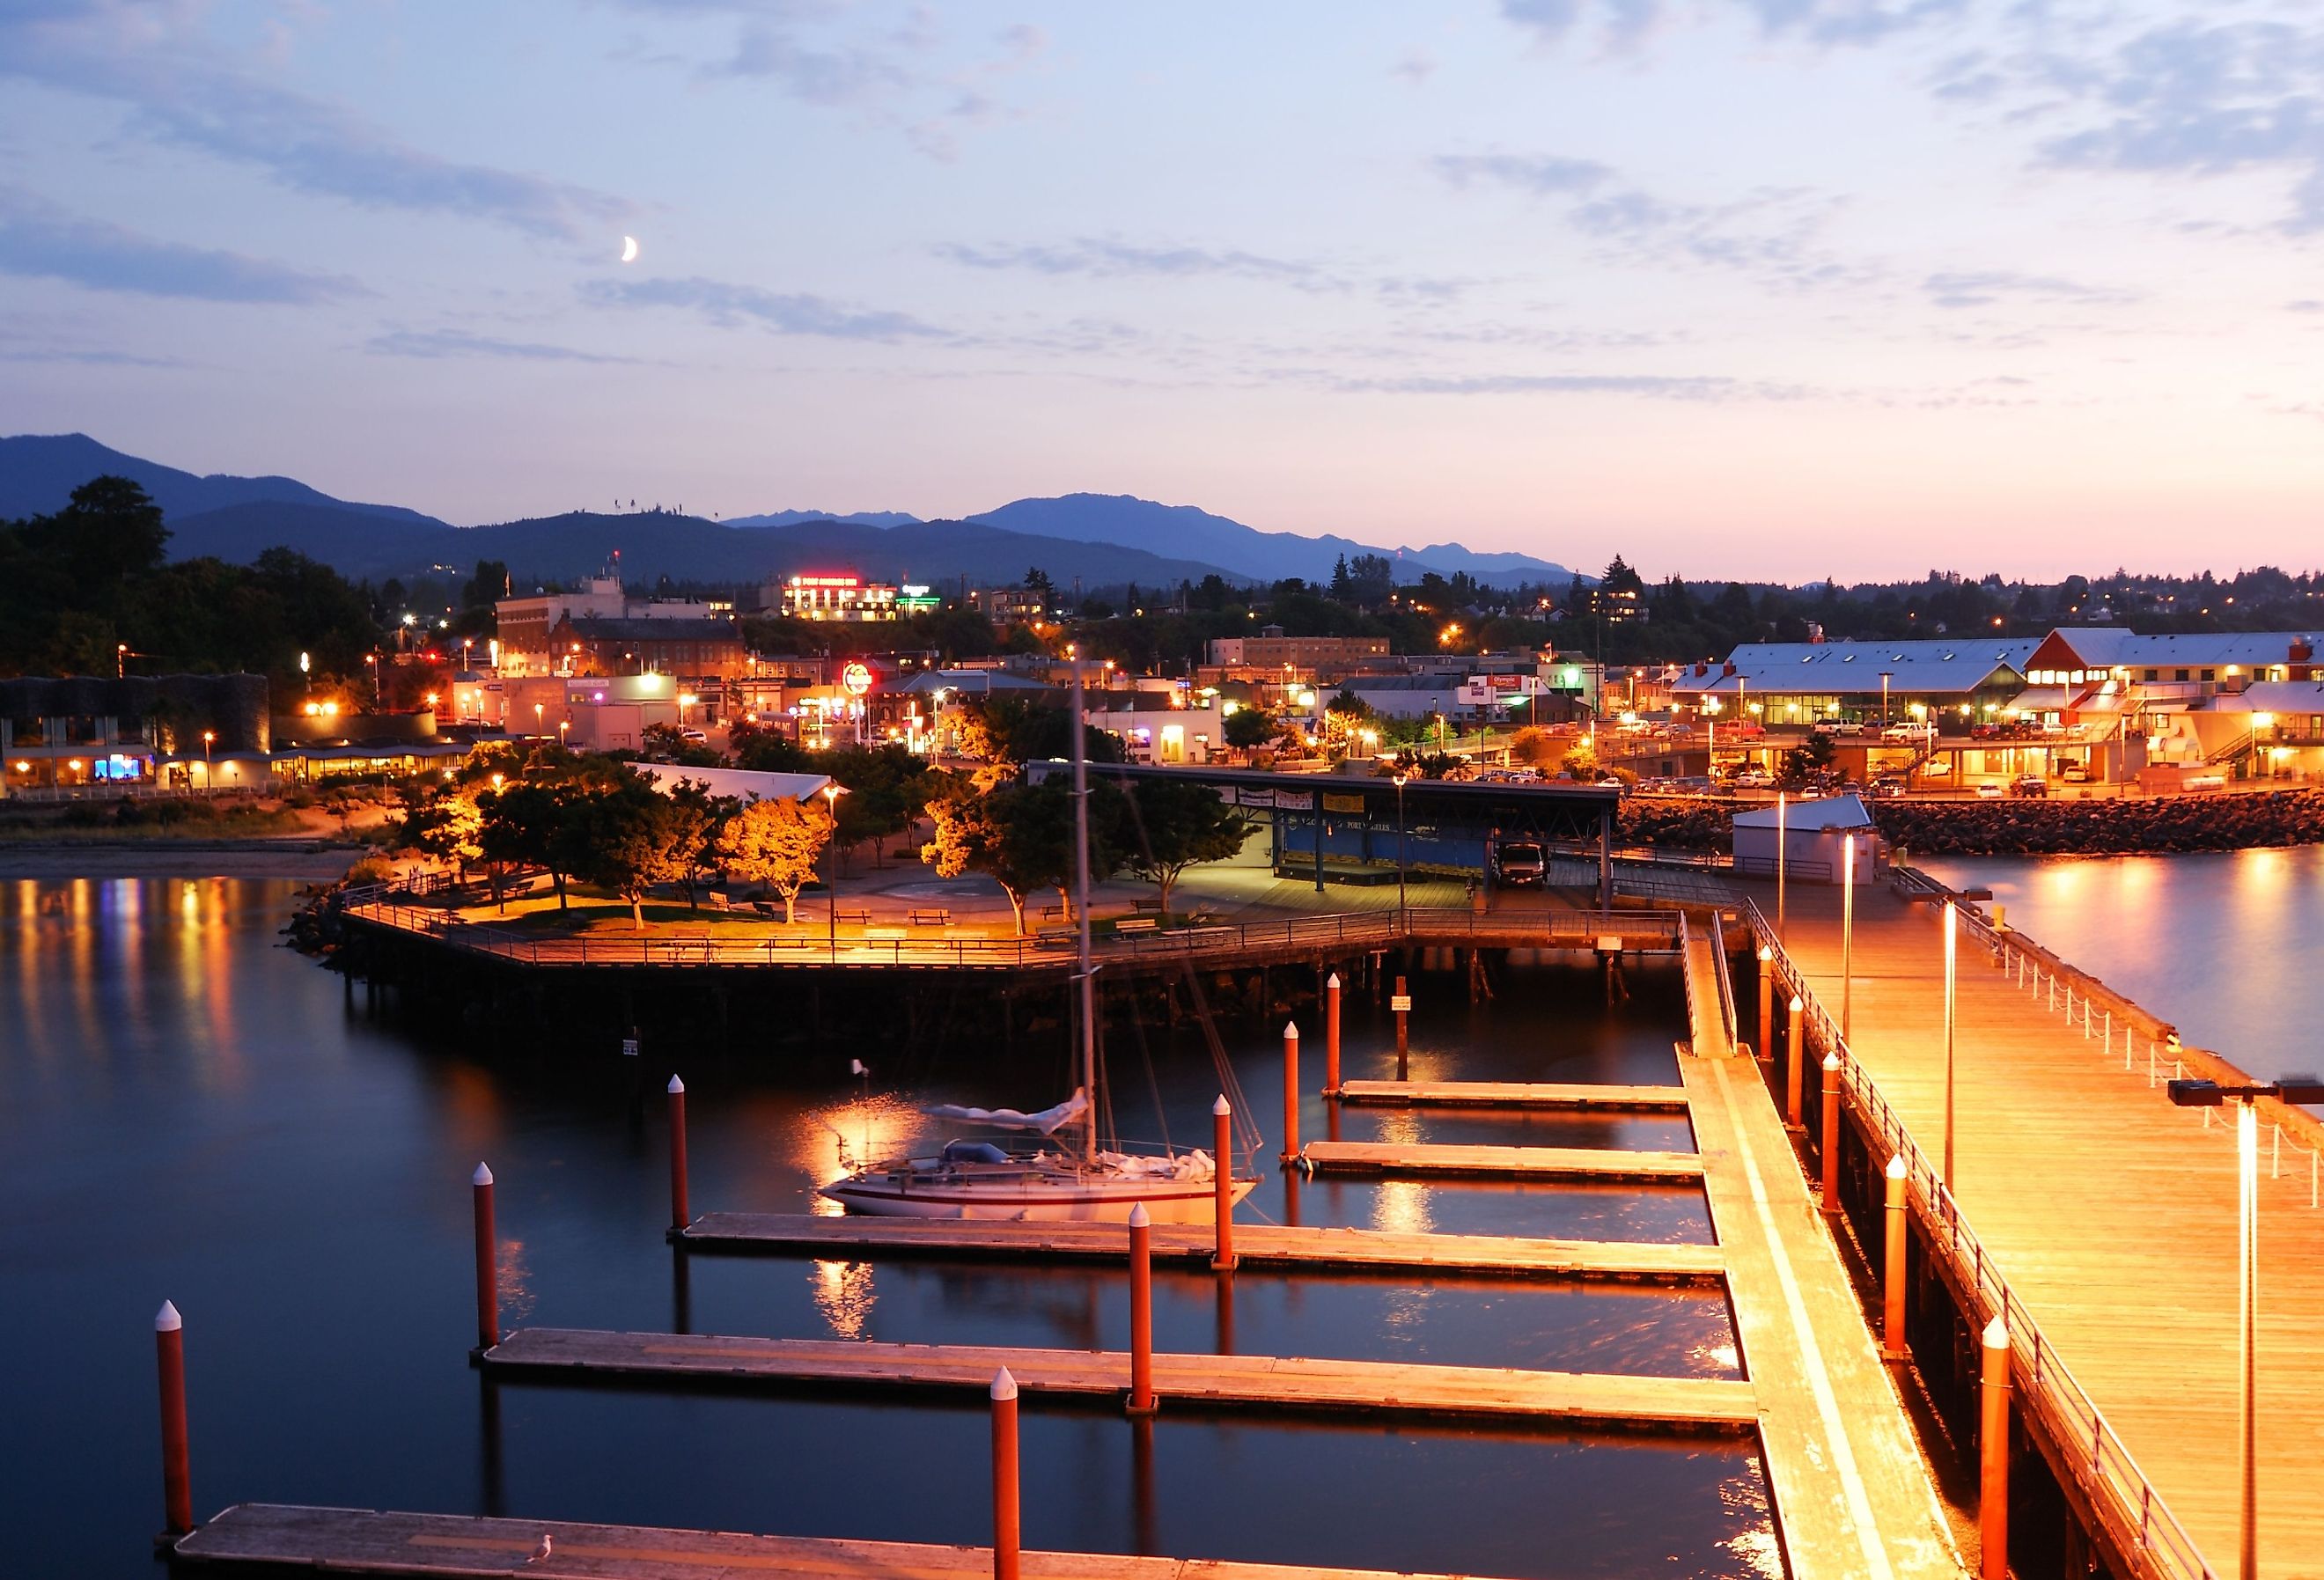 Night scene of Port Angeles in Washington state.